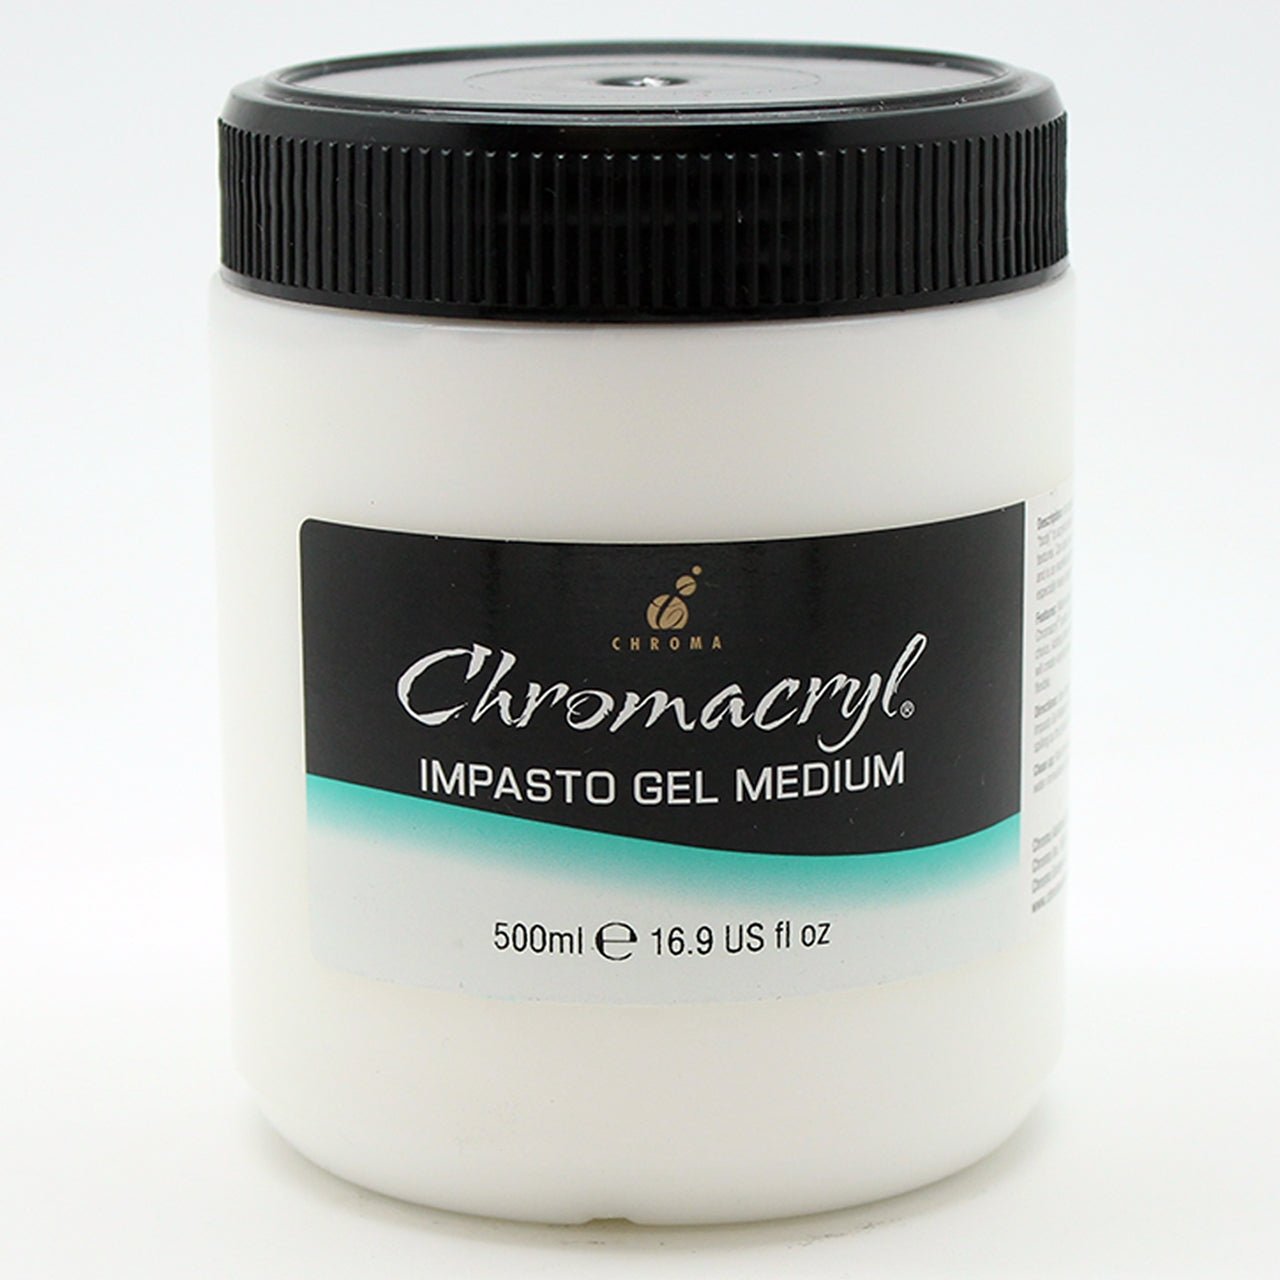 Chromacryl Impasto Gel Medium 500ml - theartshop.com.au